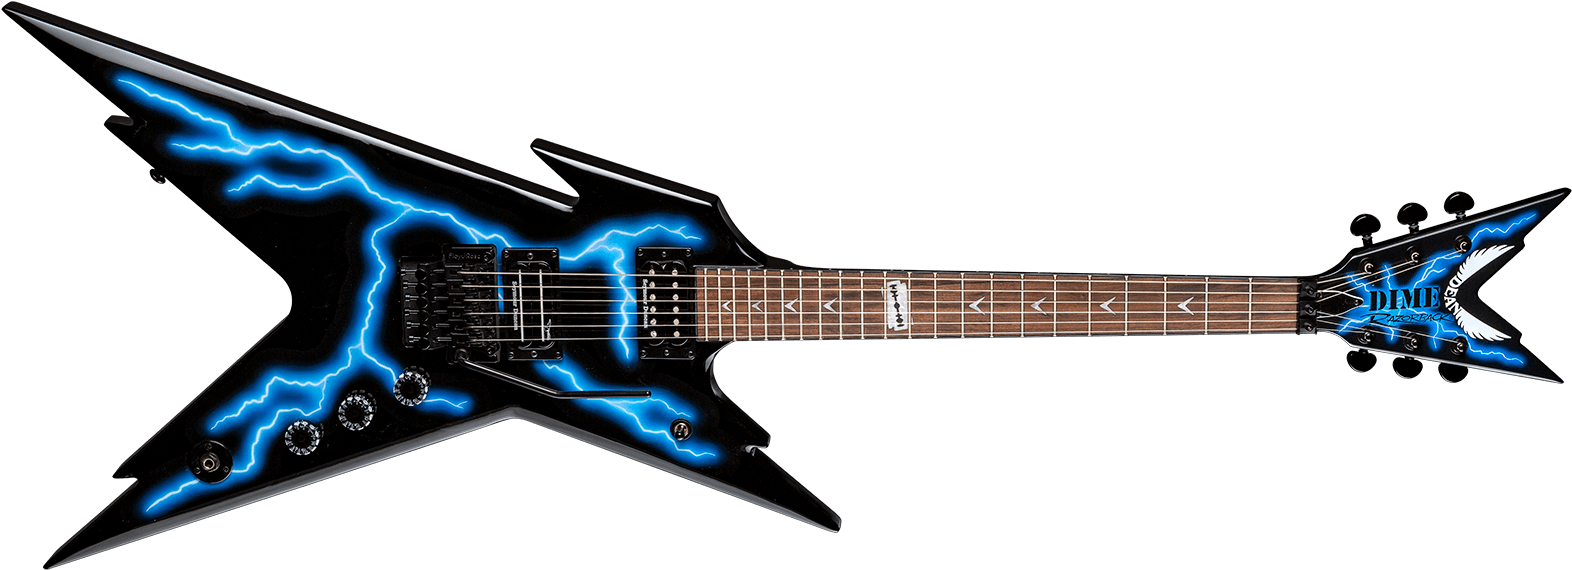 Electric Blue Lightning Guitar